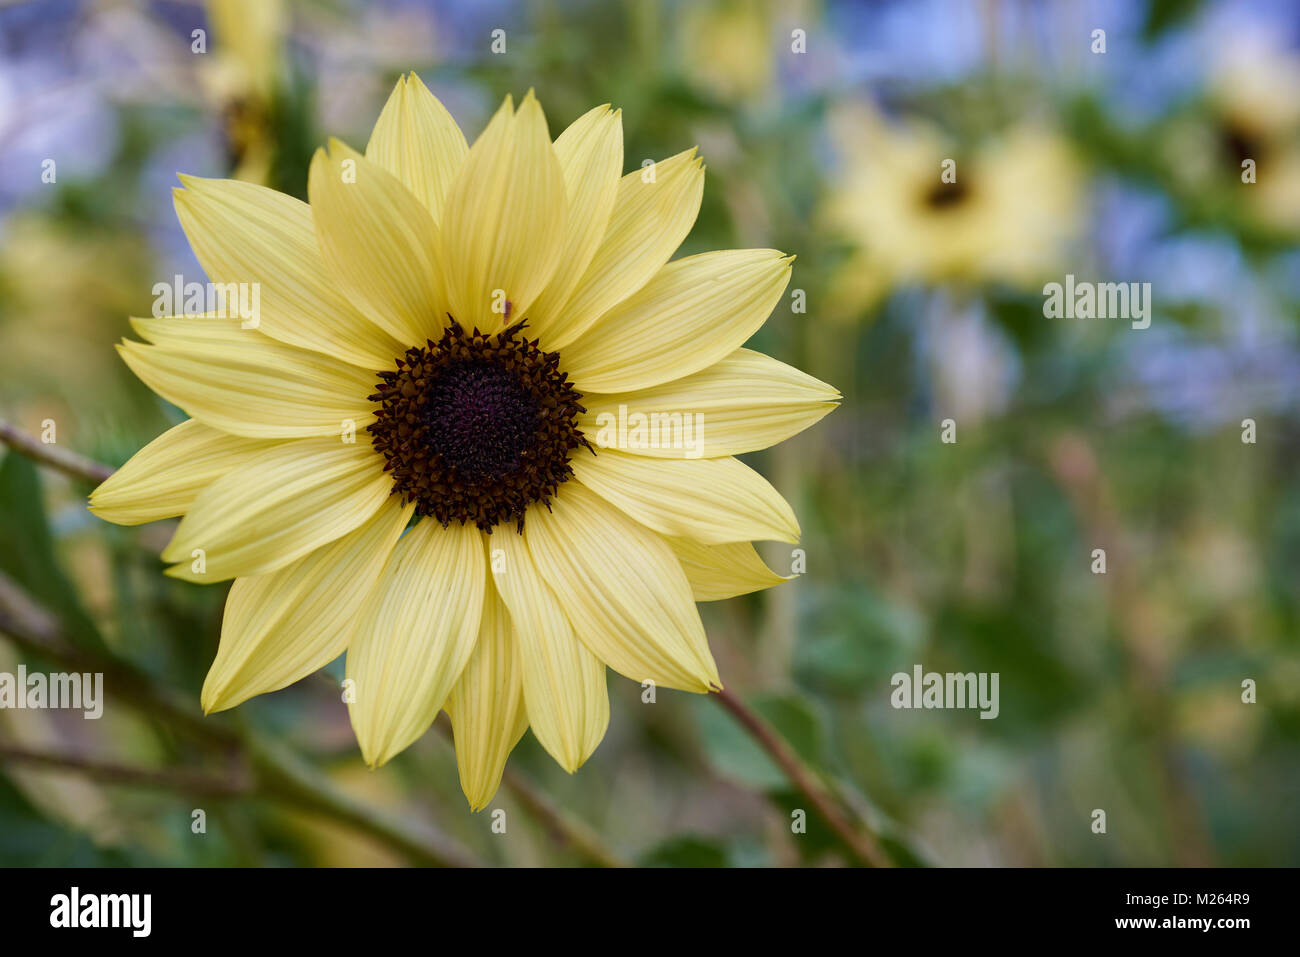 Italian White Sunflower growing in garden. Stock Photo